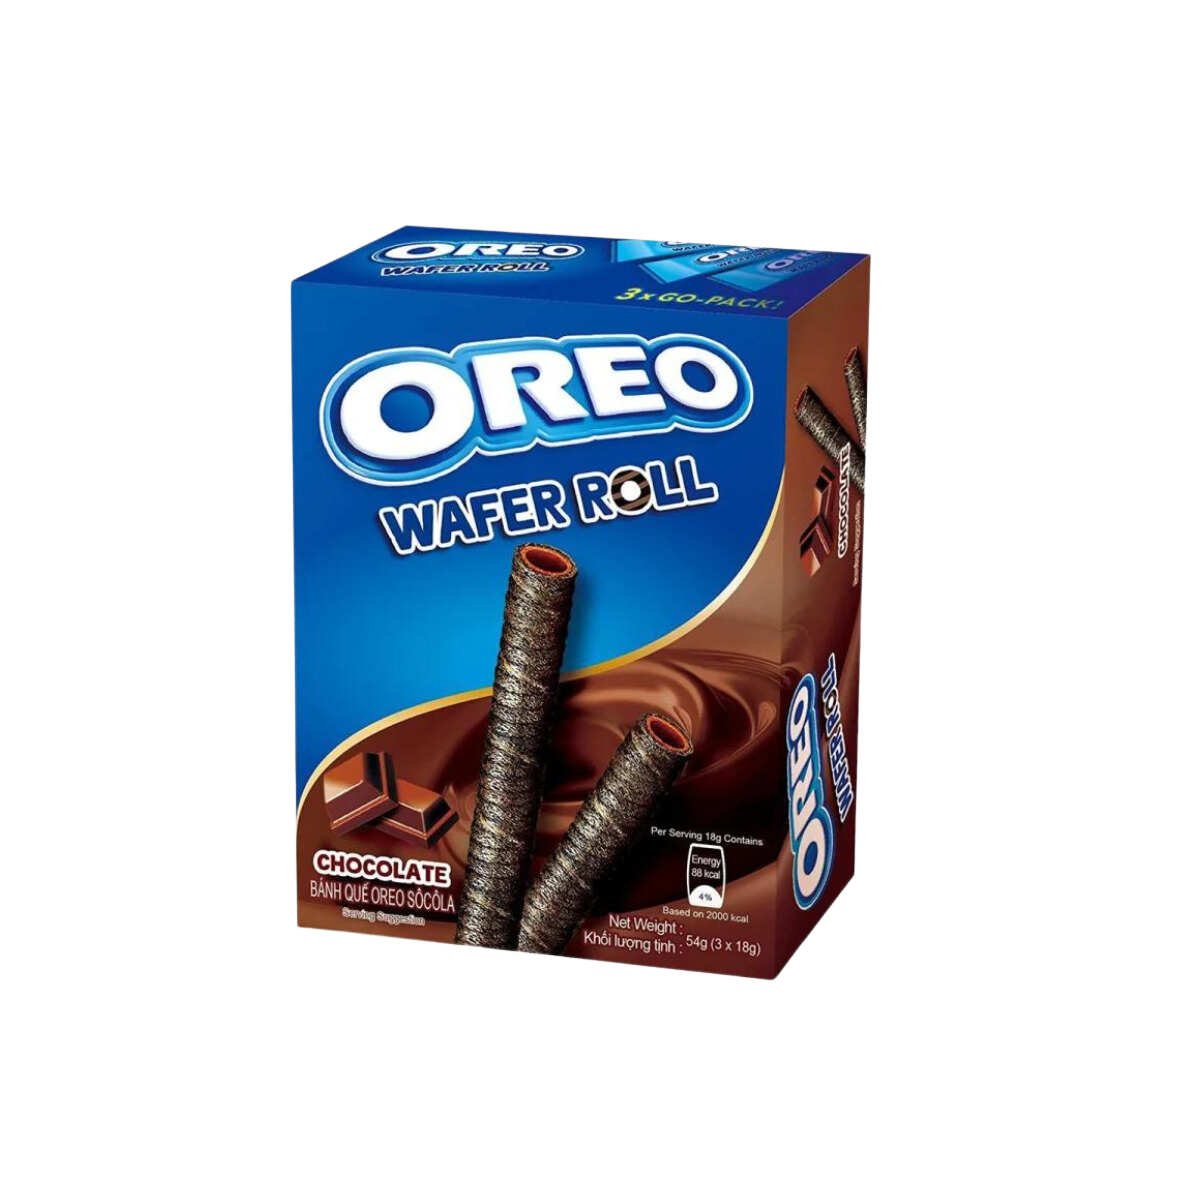 Oreo Wafer roll chocolate